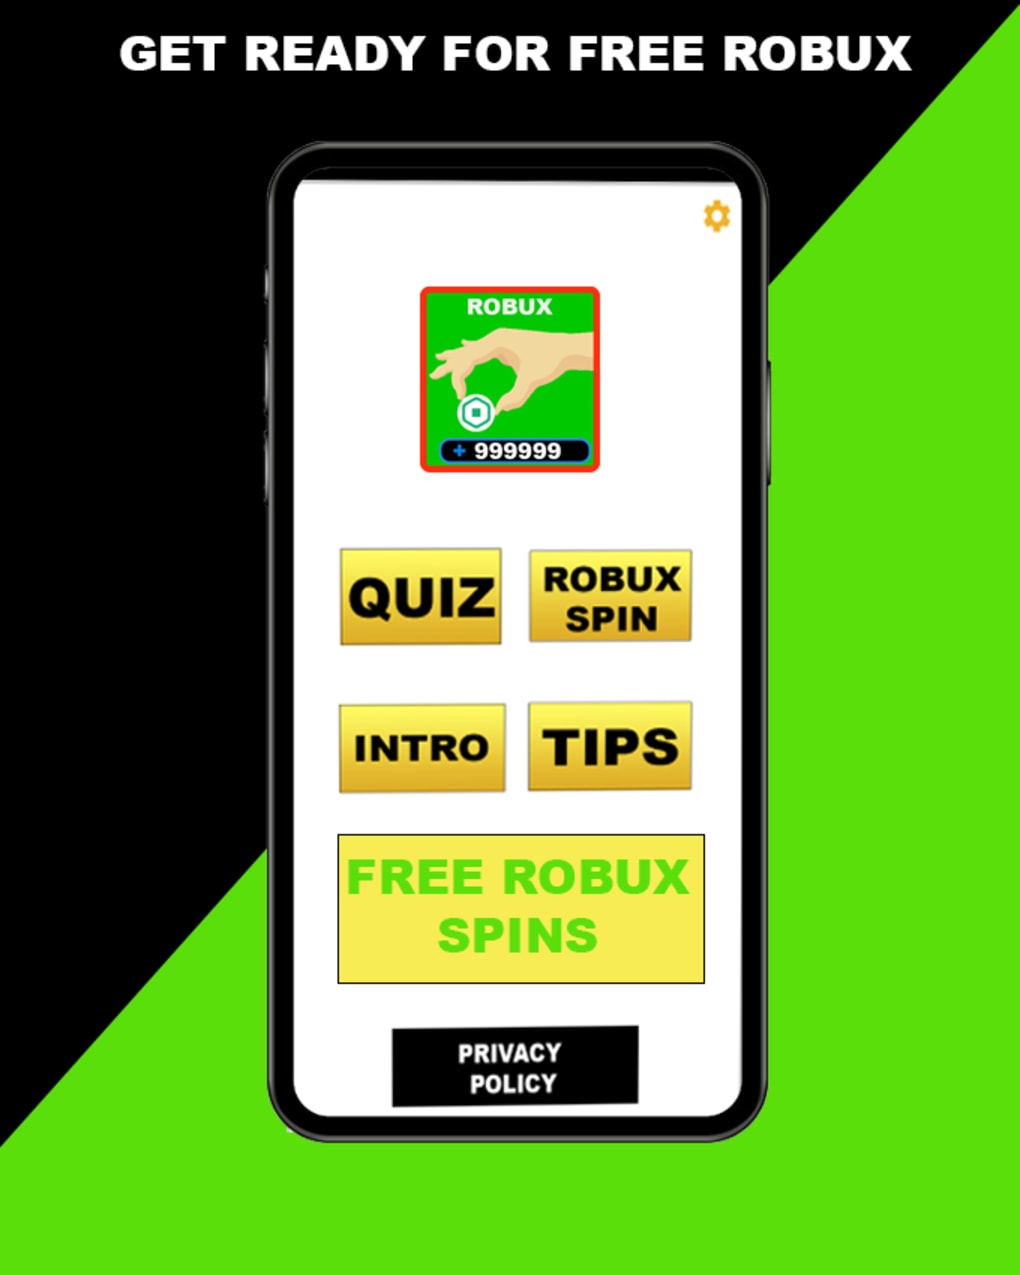 About: Free Robux Quiz R$ - NEW R0BL0X QUIZ! (Google Play version